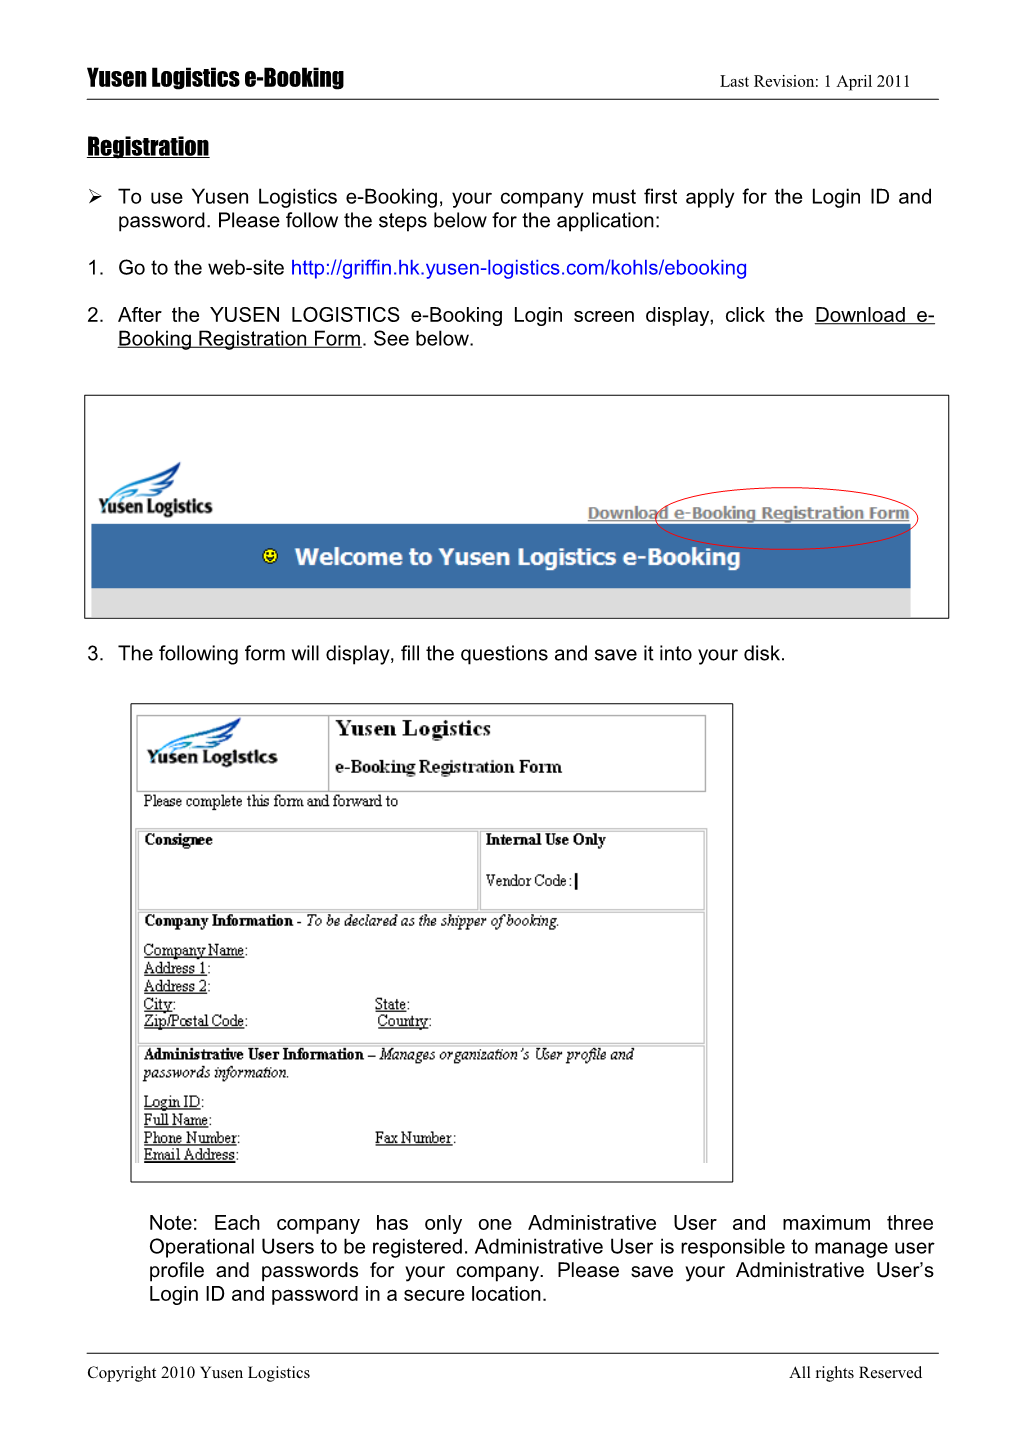 Yusen Logistics E-Booking Last Revision: 1 April 2011